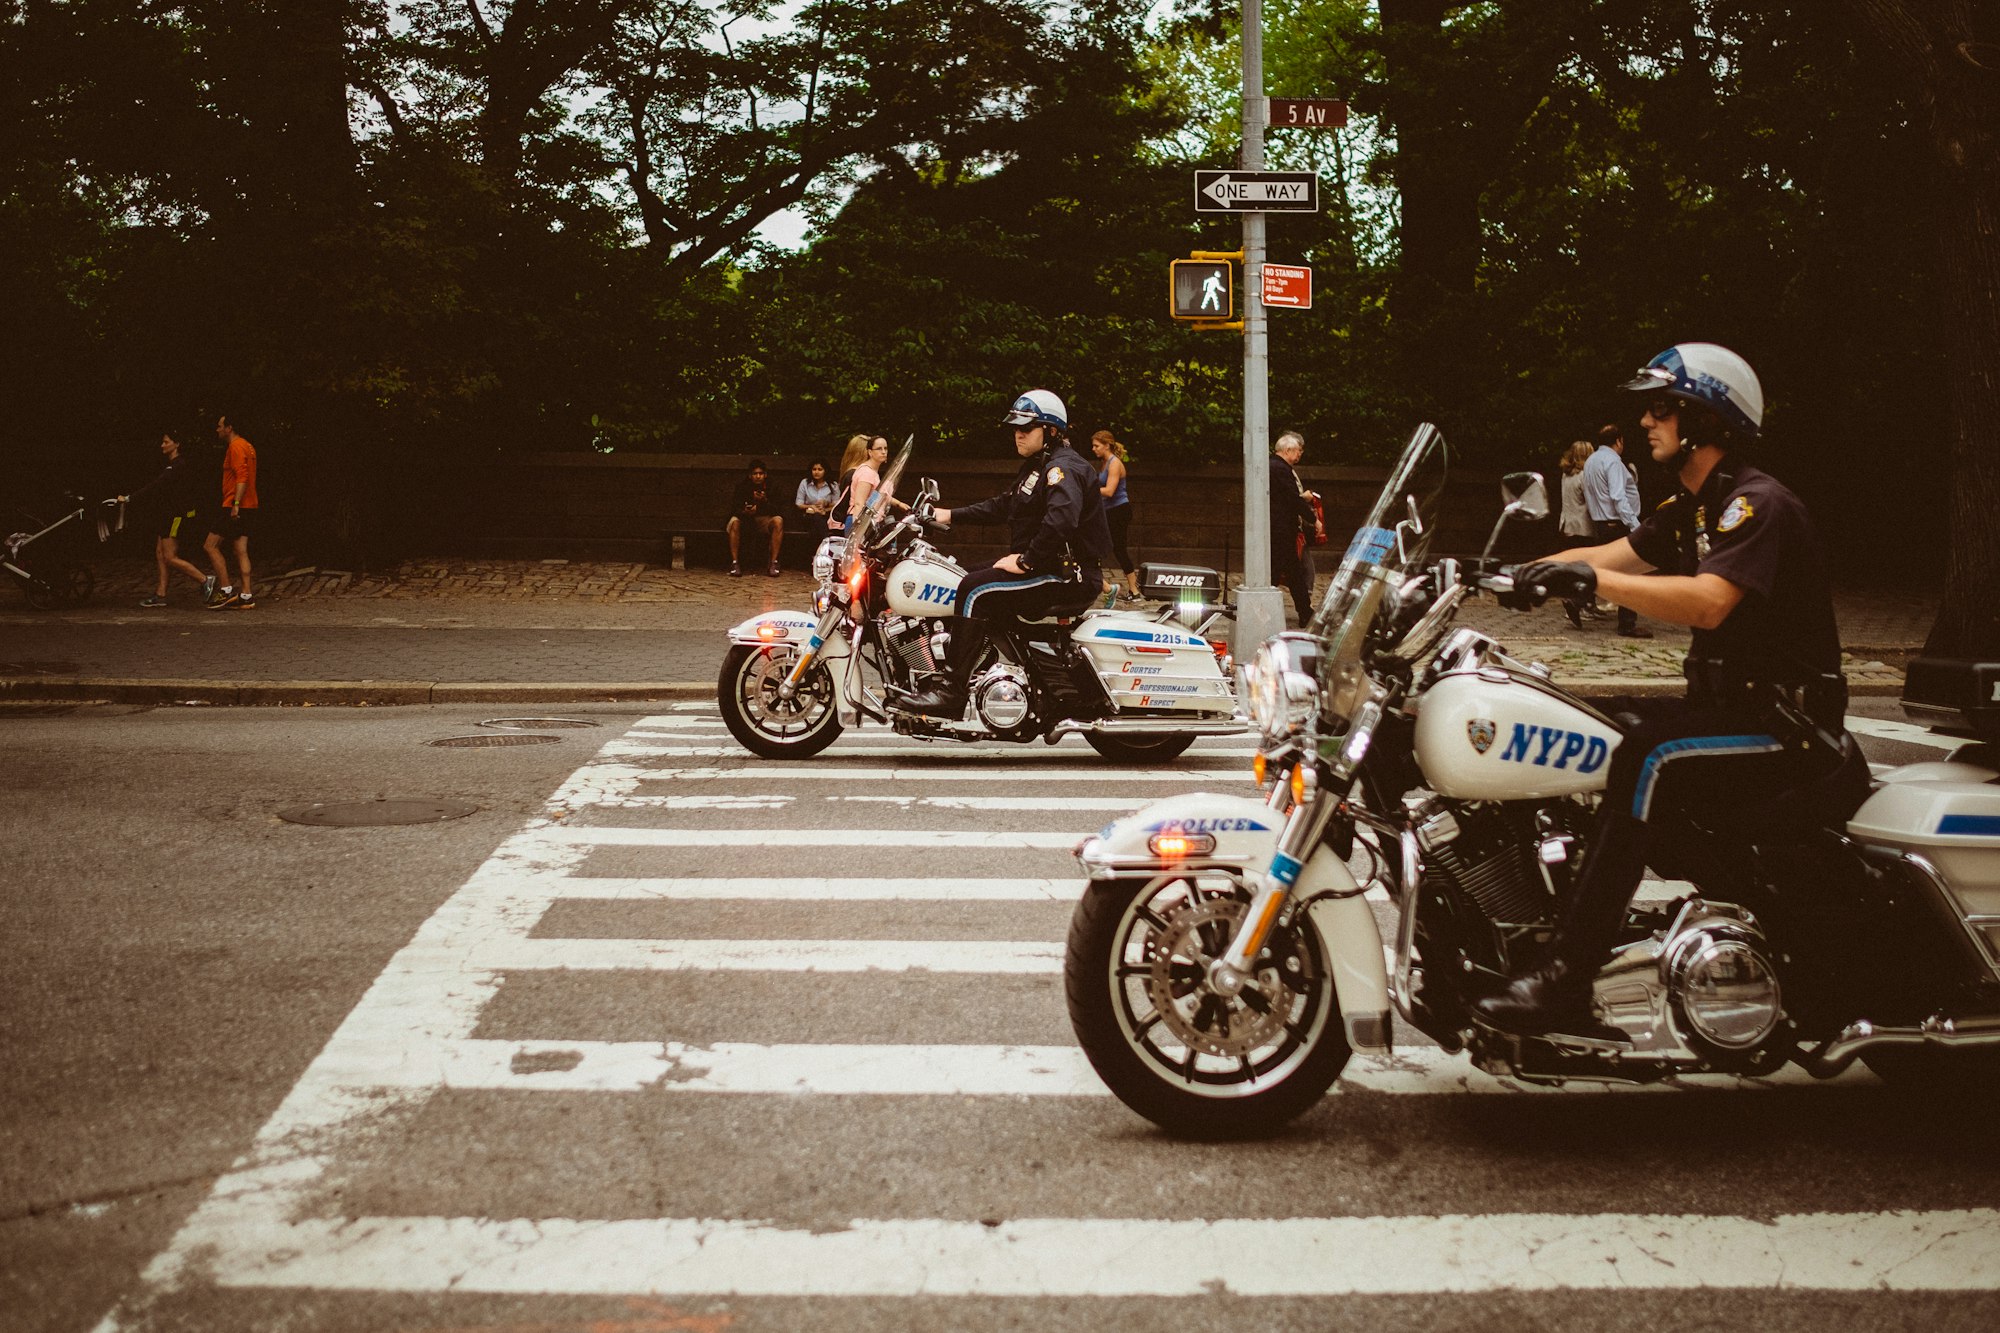 Central Park police officers